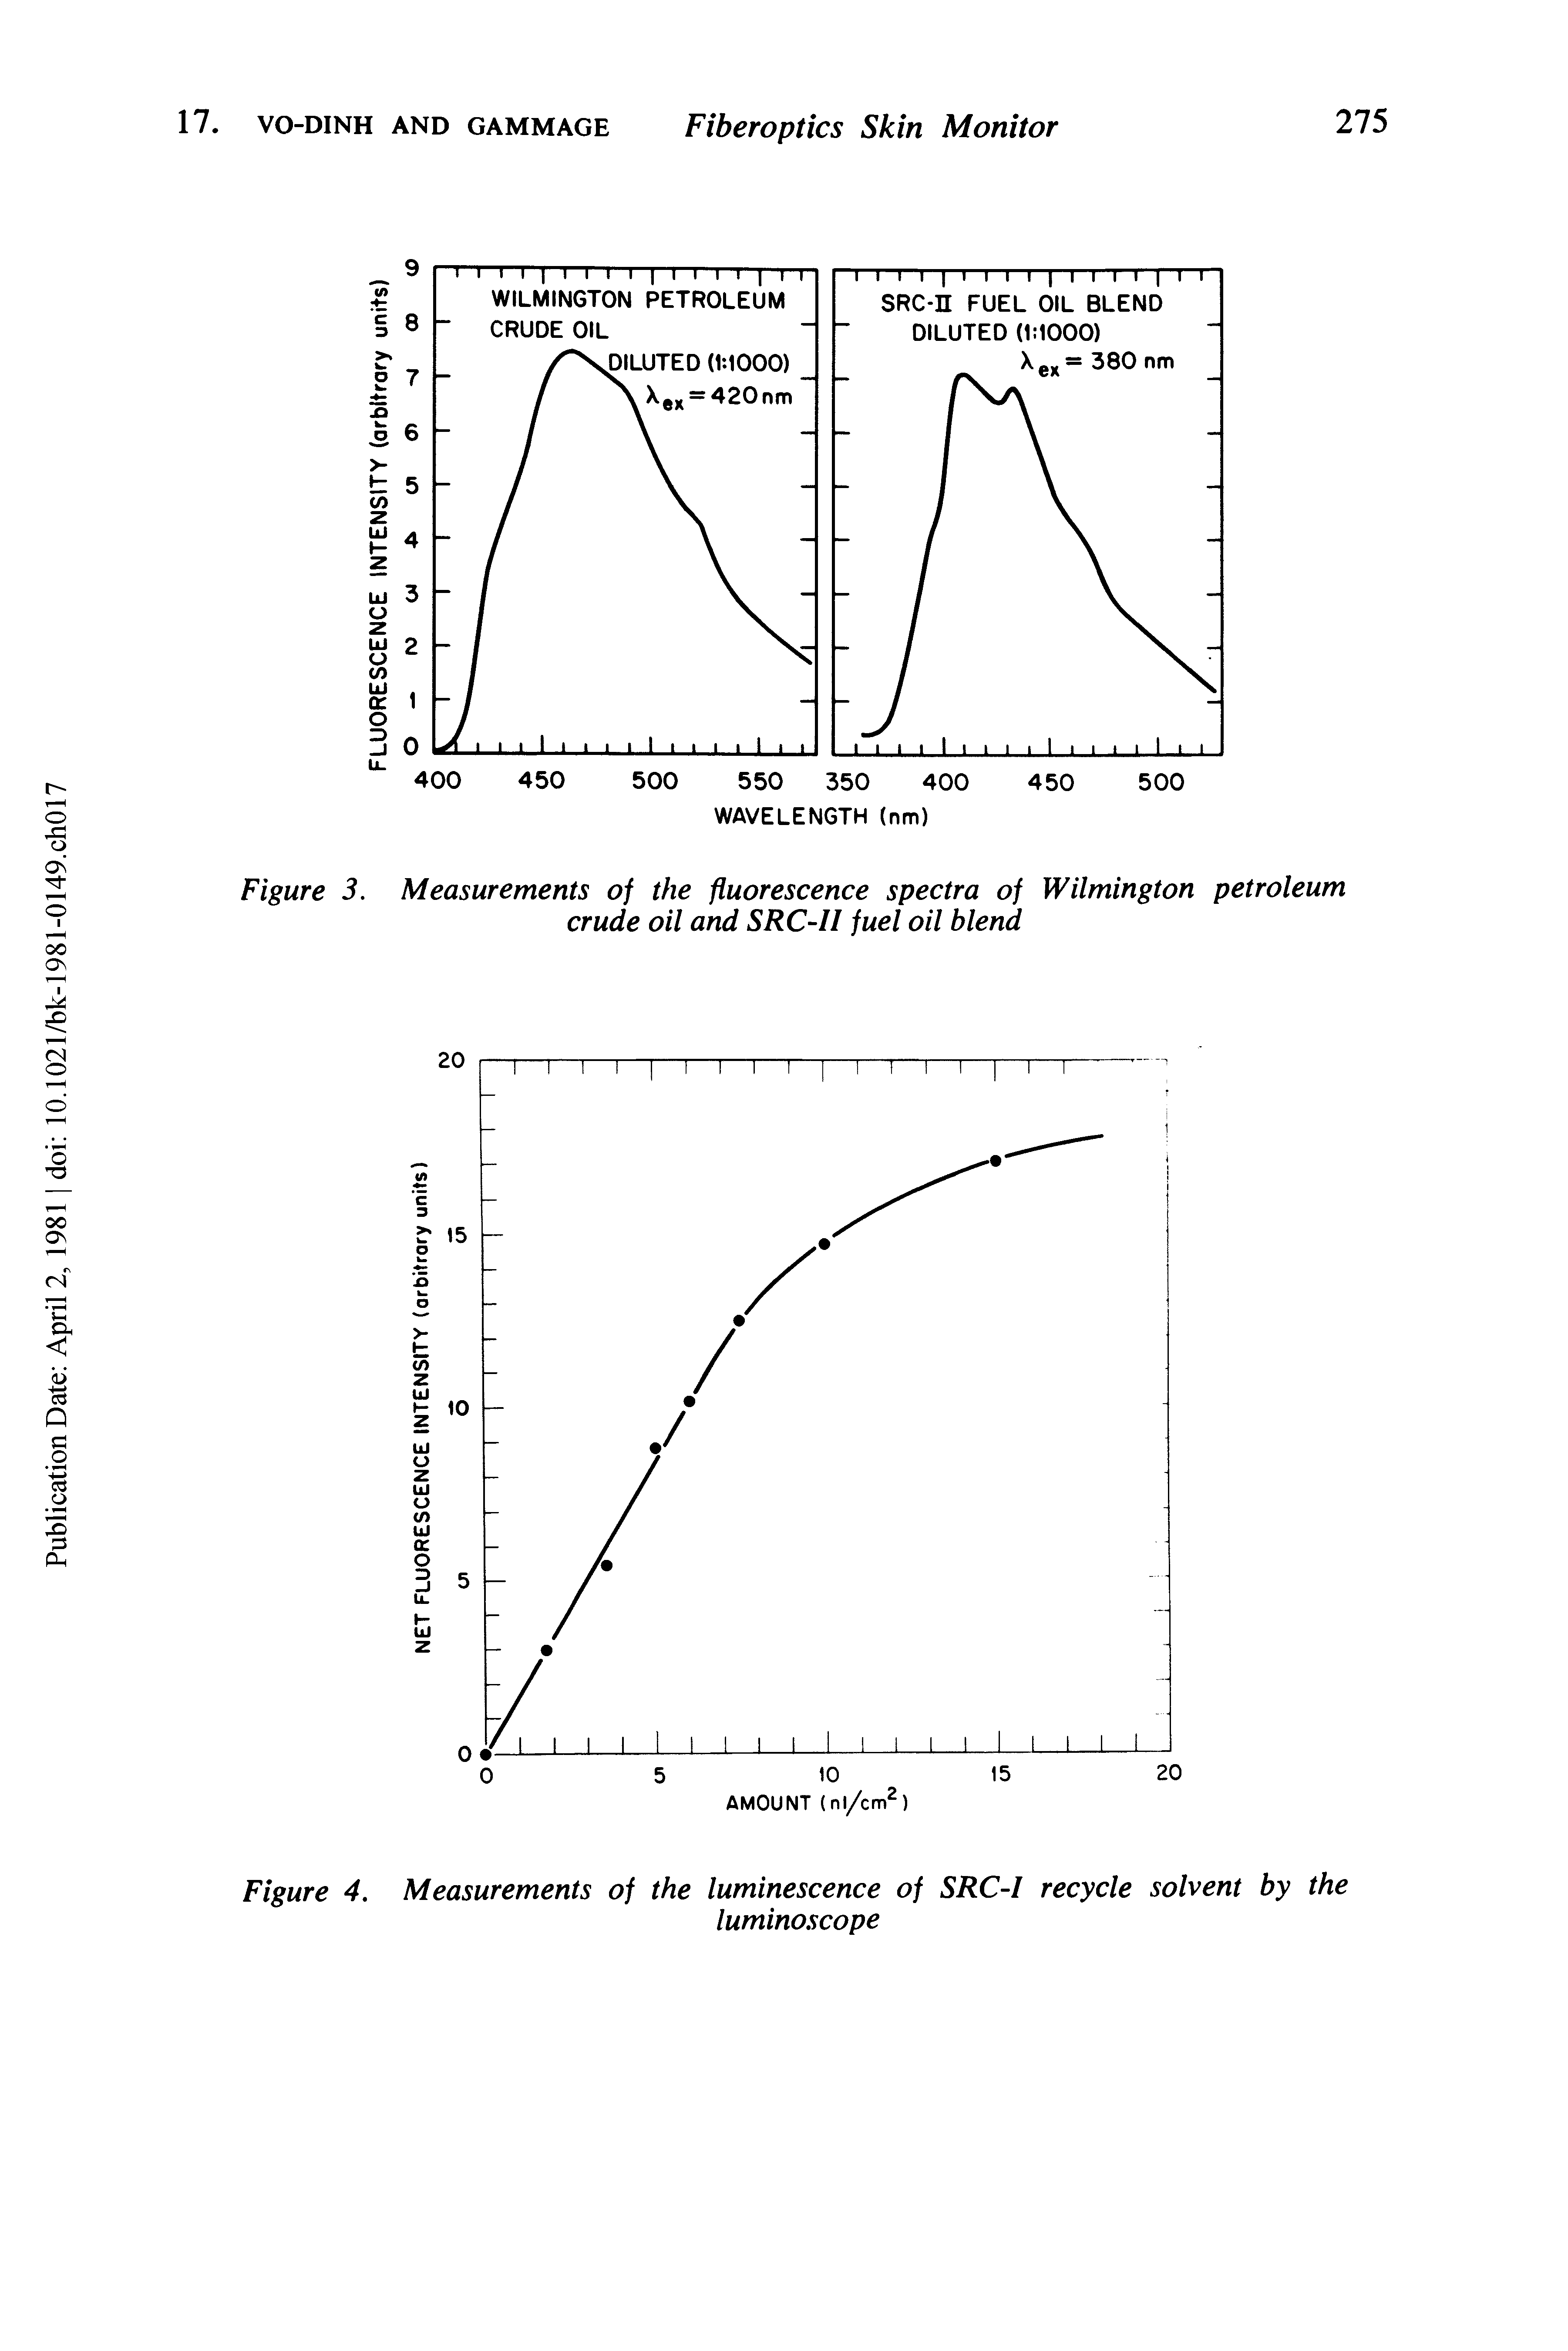 Figure 3. Measurements of the fluorescence spectra of Wilmington petroleum crude oil and SRC-II fuel oil blend...